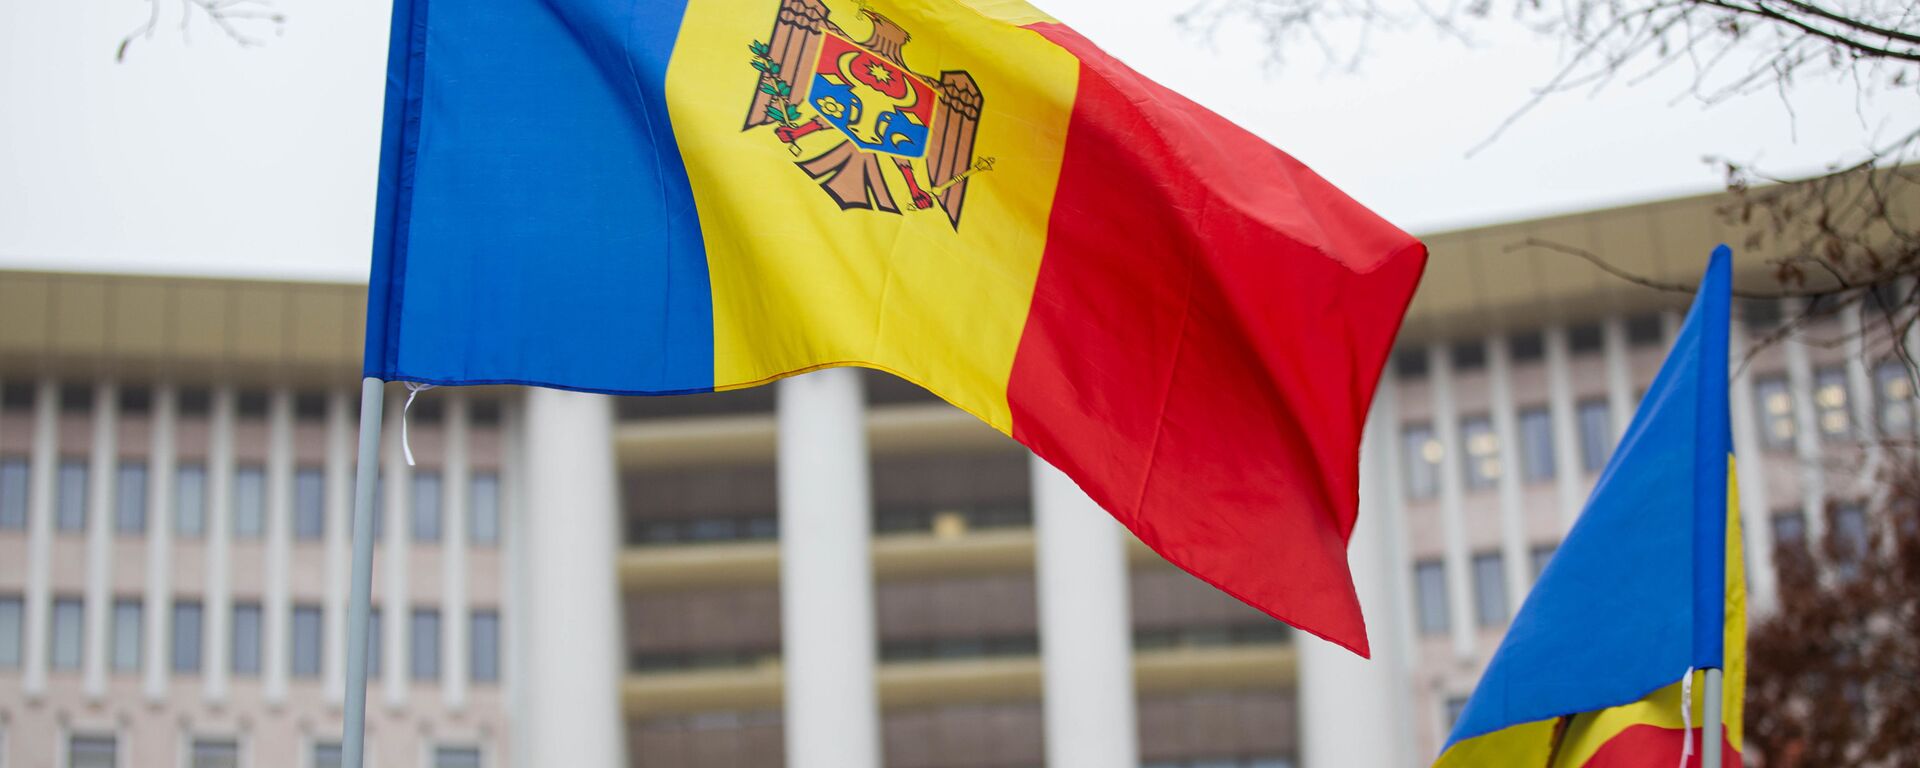 Флаг Молдовы перед зданием парламента - Sputnik Молдова, 1920, 25.02.2021